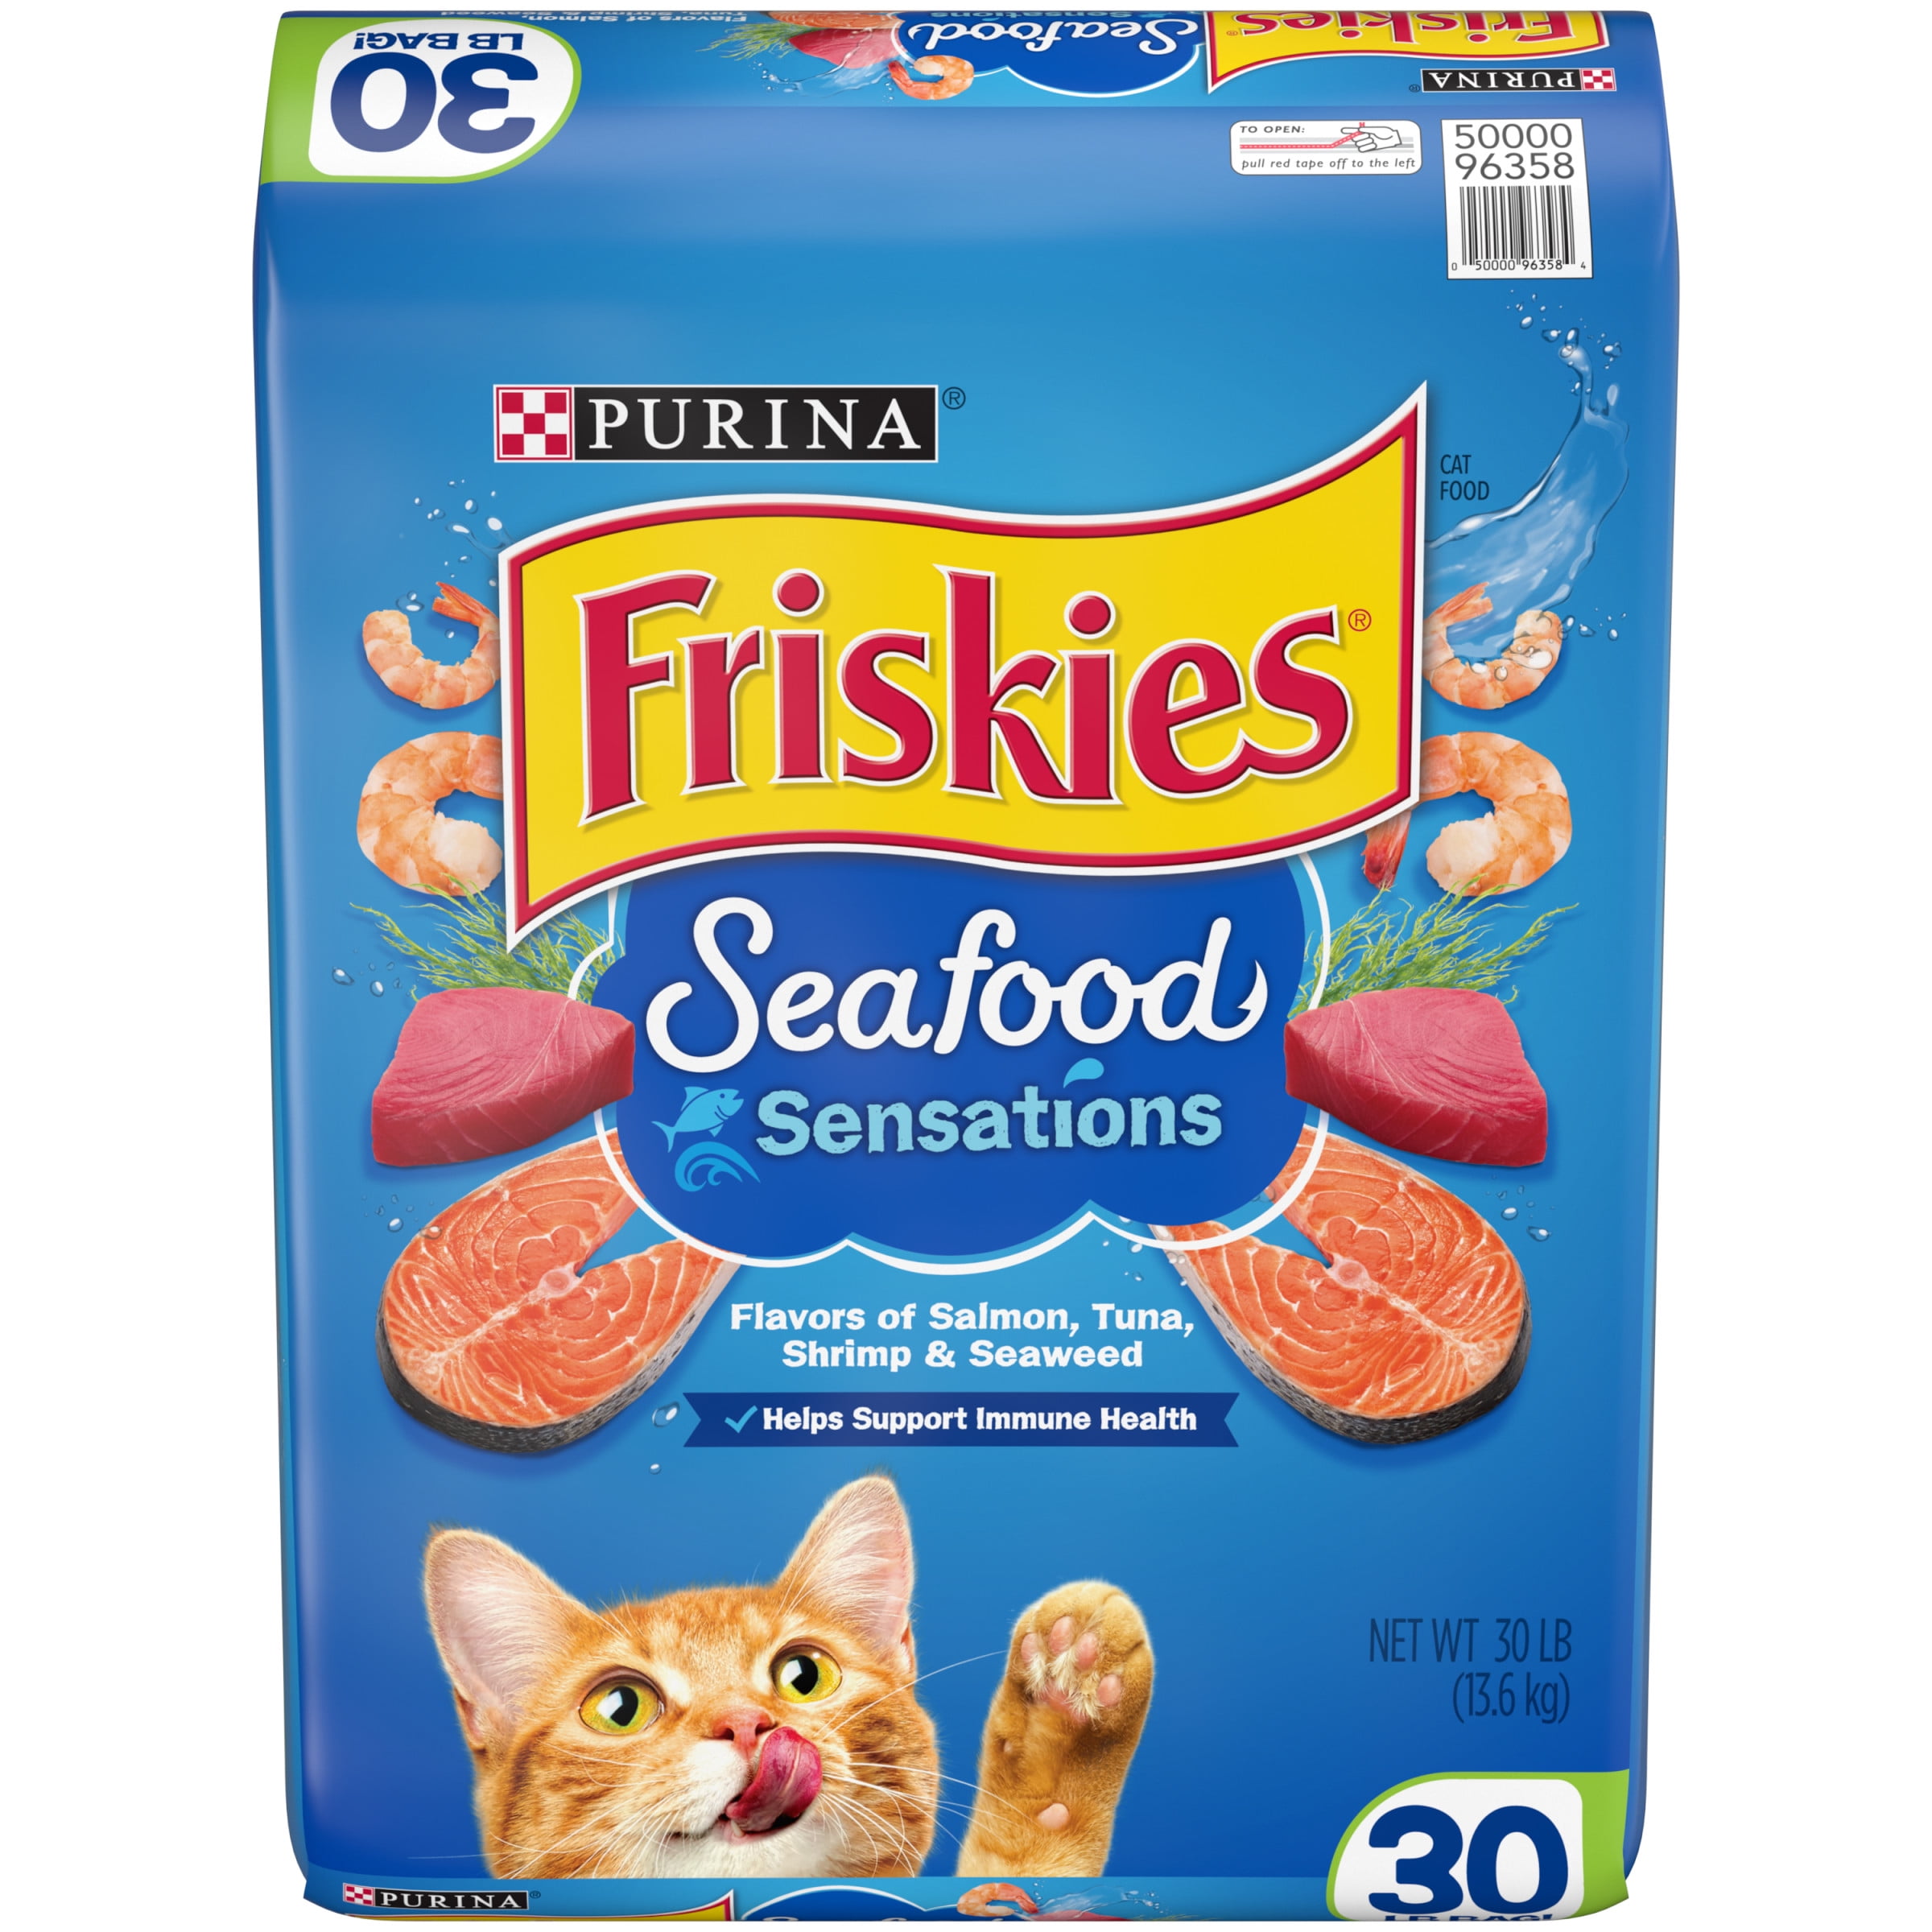 Purina Friskies Seafood Sensations Dry Cat Food 30lbs $25.88 @ Walmart free S/H with Plus Membership + $3.00 Walmart Cash